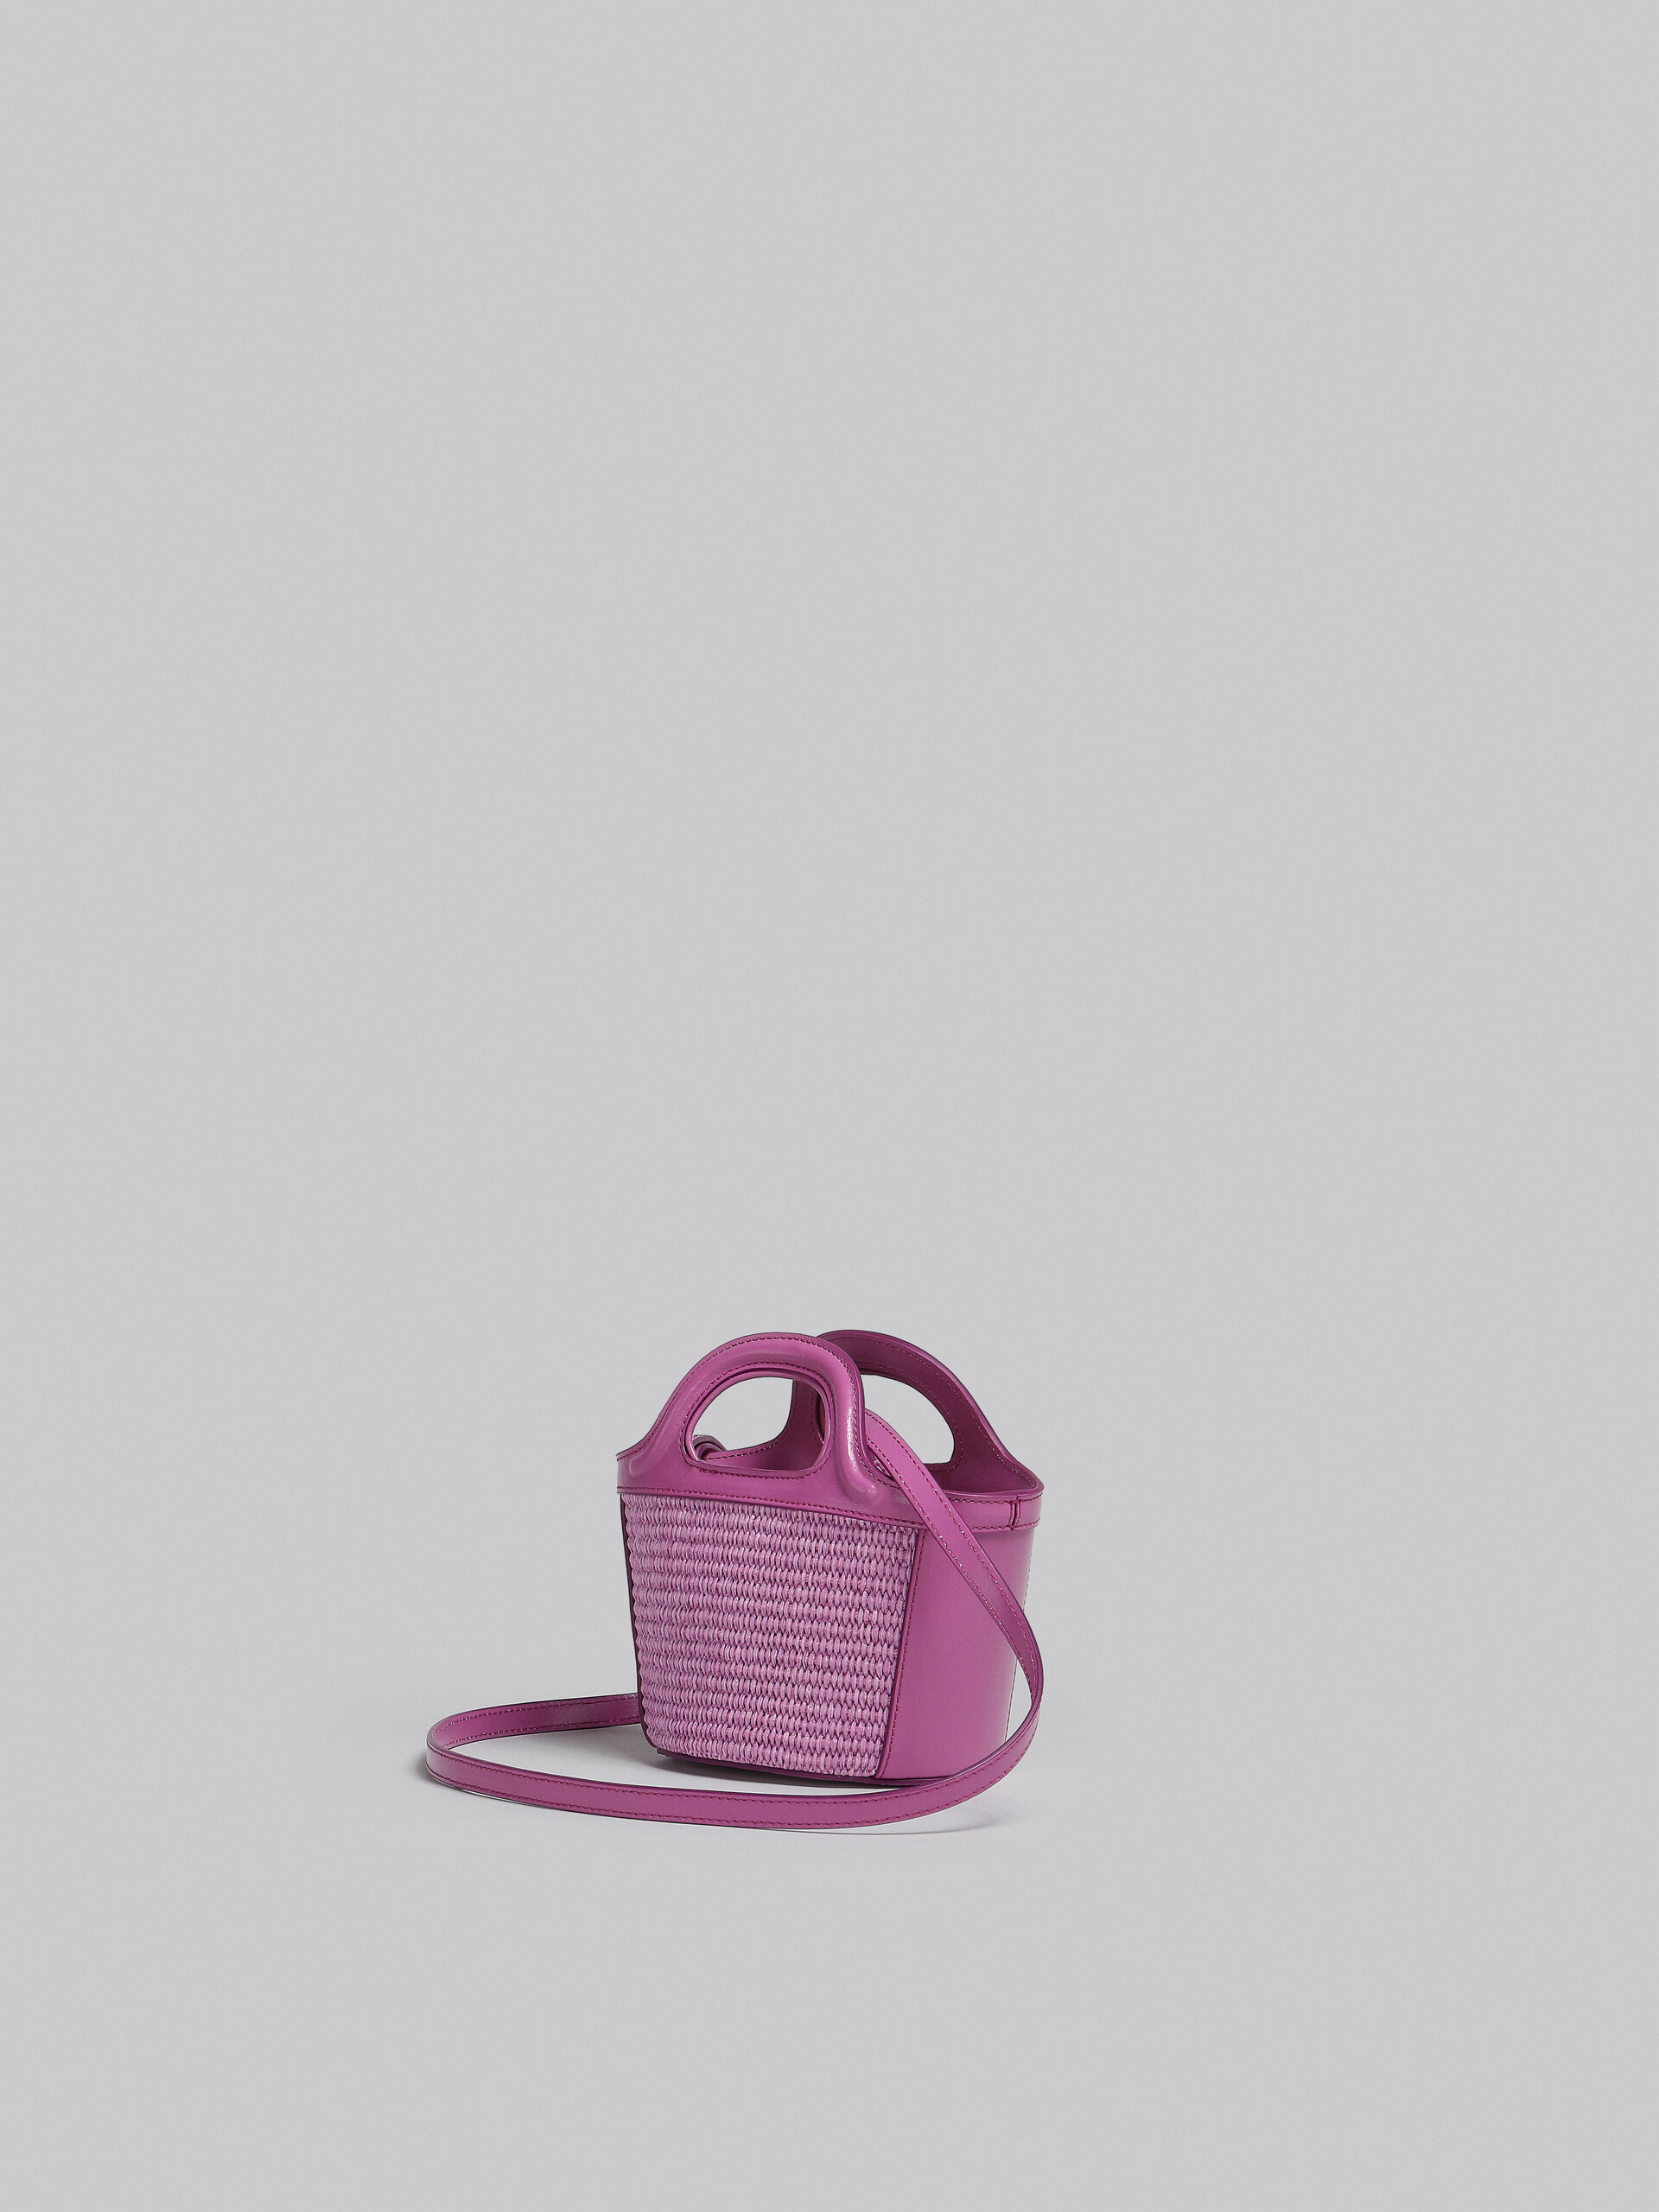 Tropicalia Micro Bag in lilac leather and raffia - Handbag - Image 3